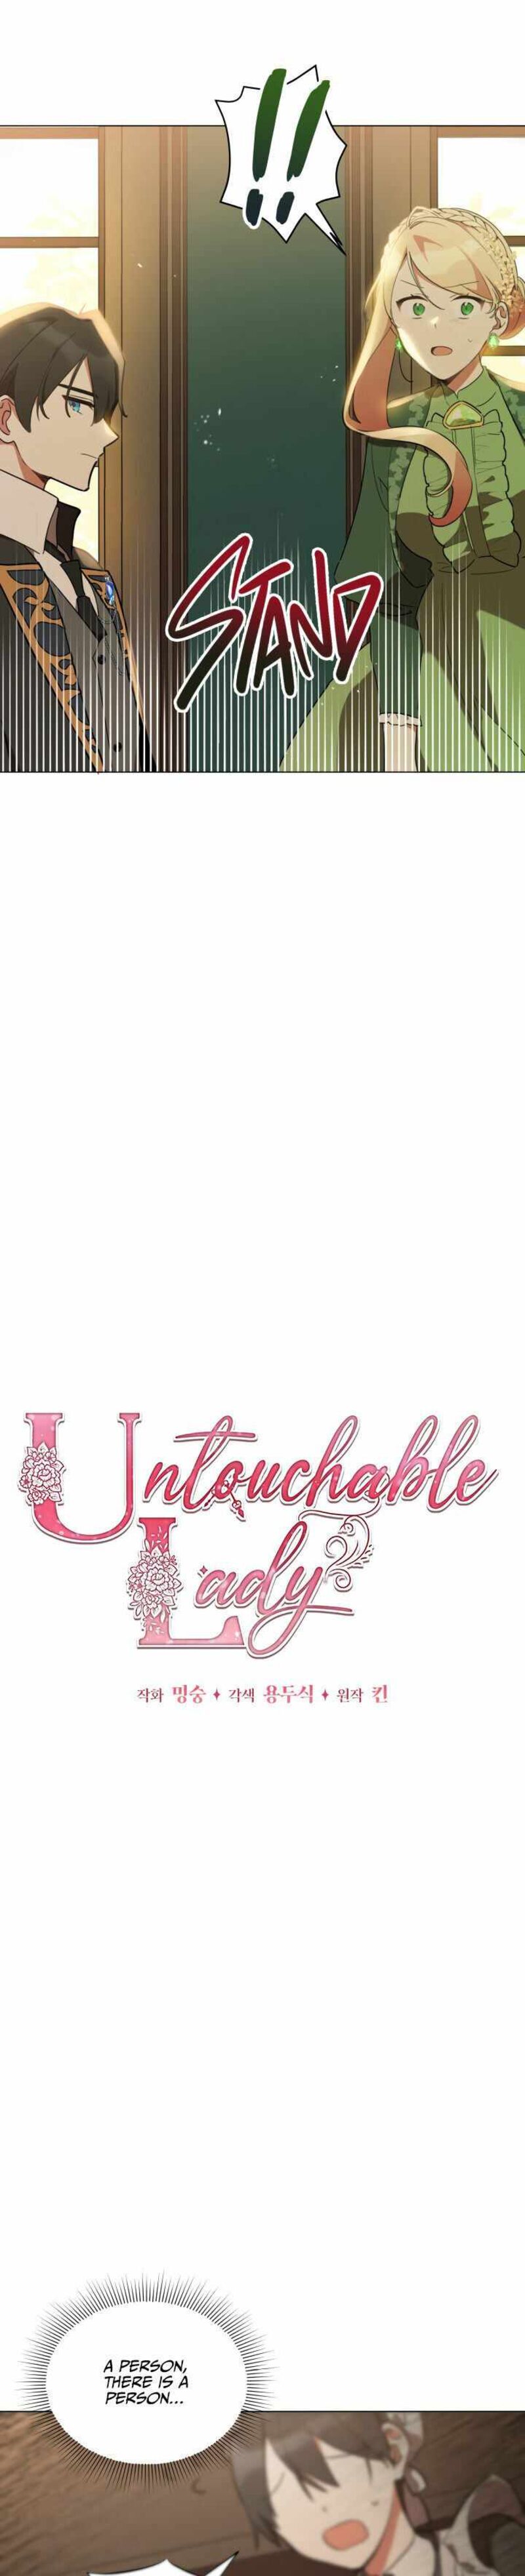 Untouchable Lady 15 12